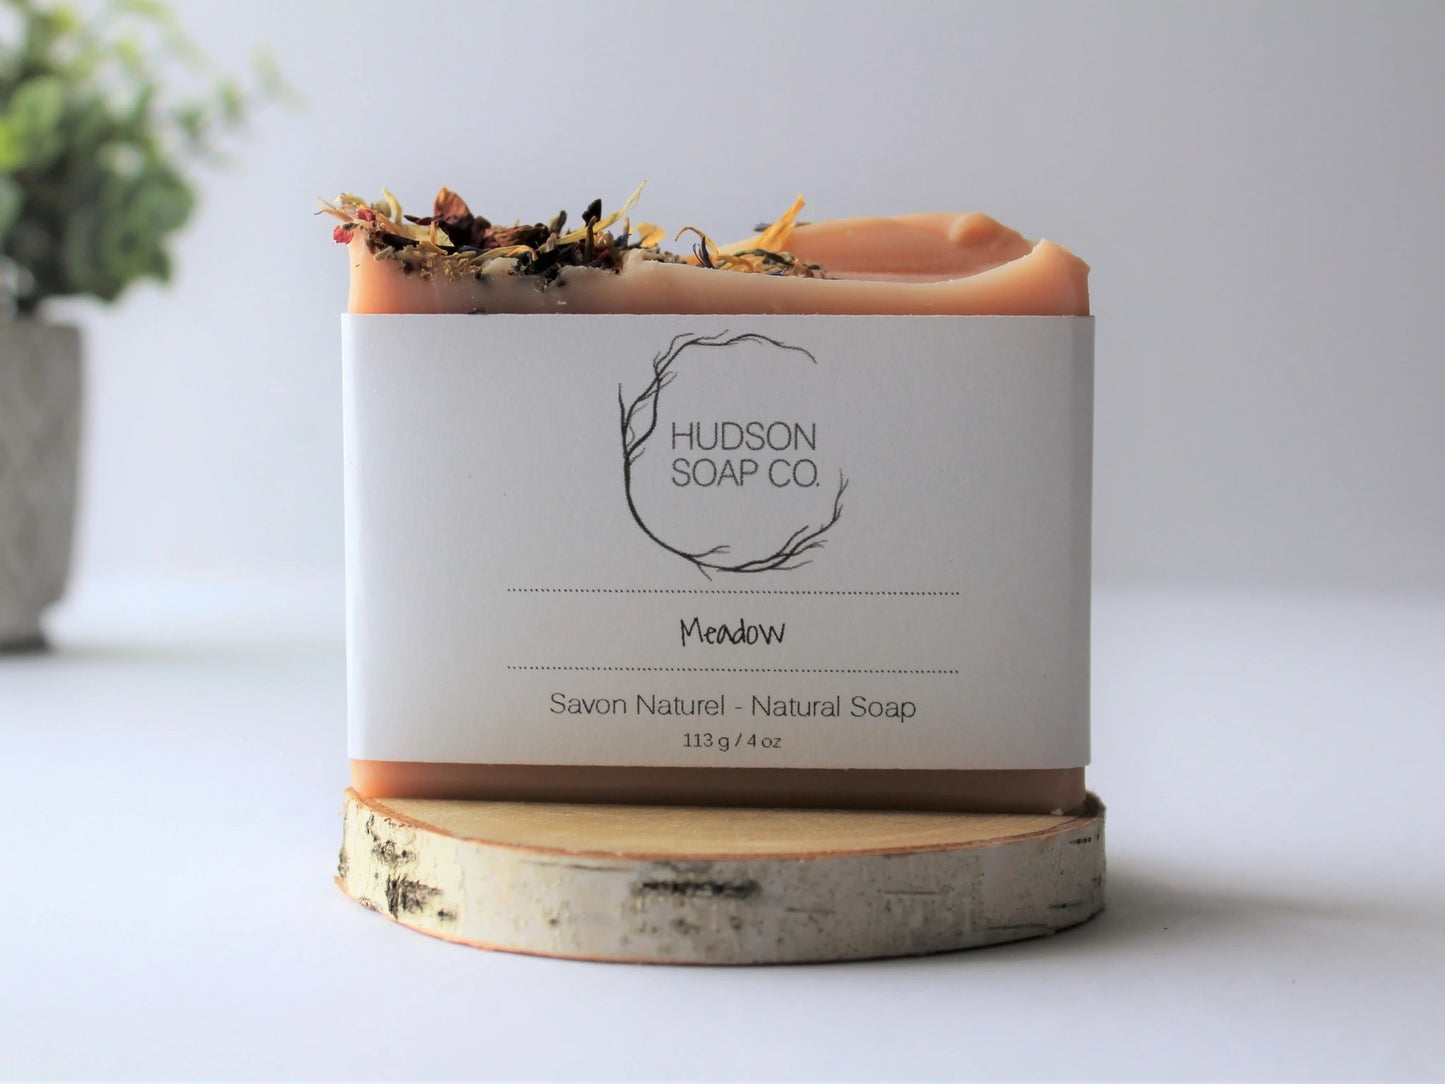 Handmade natural floral soap bar in Hudson Soap Co. white packaging